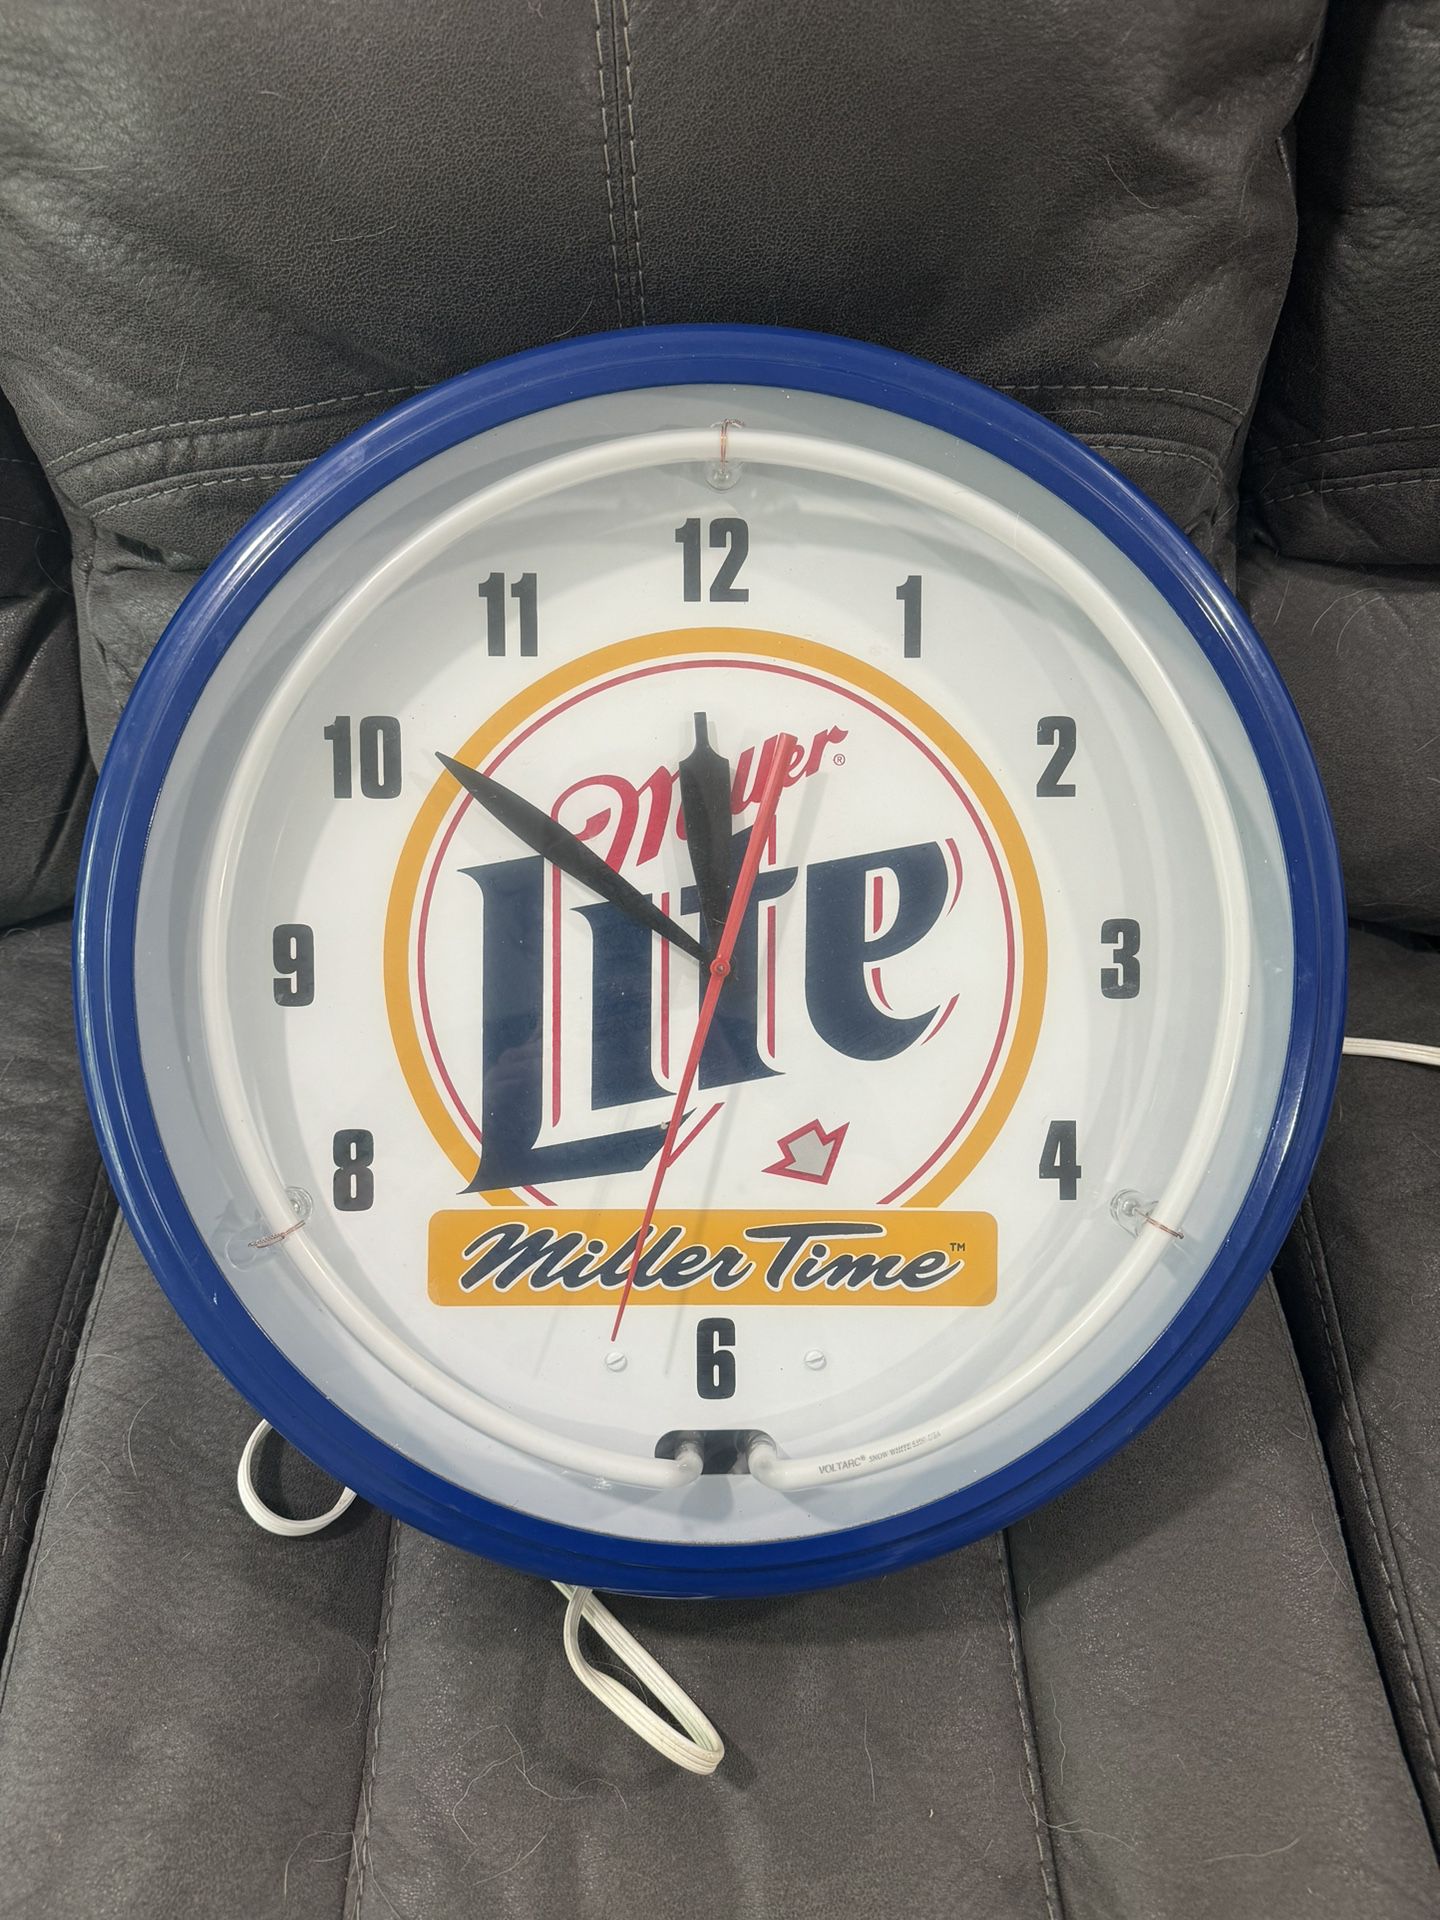 1999 Miller Lite “Miller Time” Neon Clock